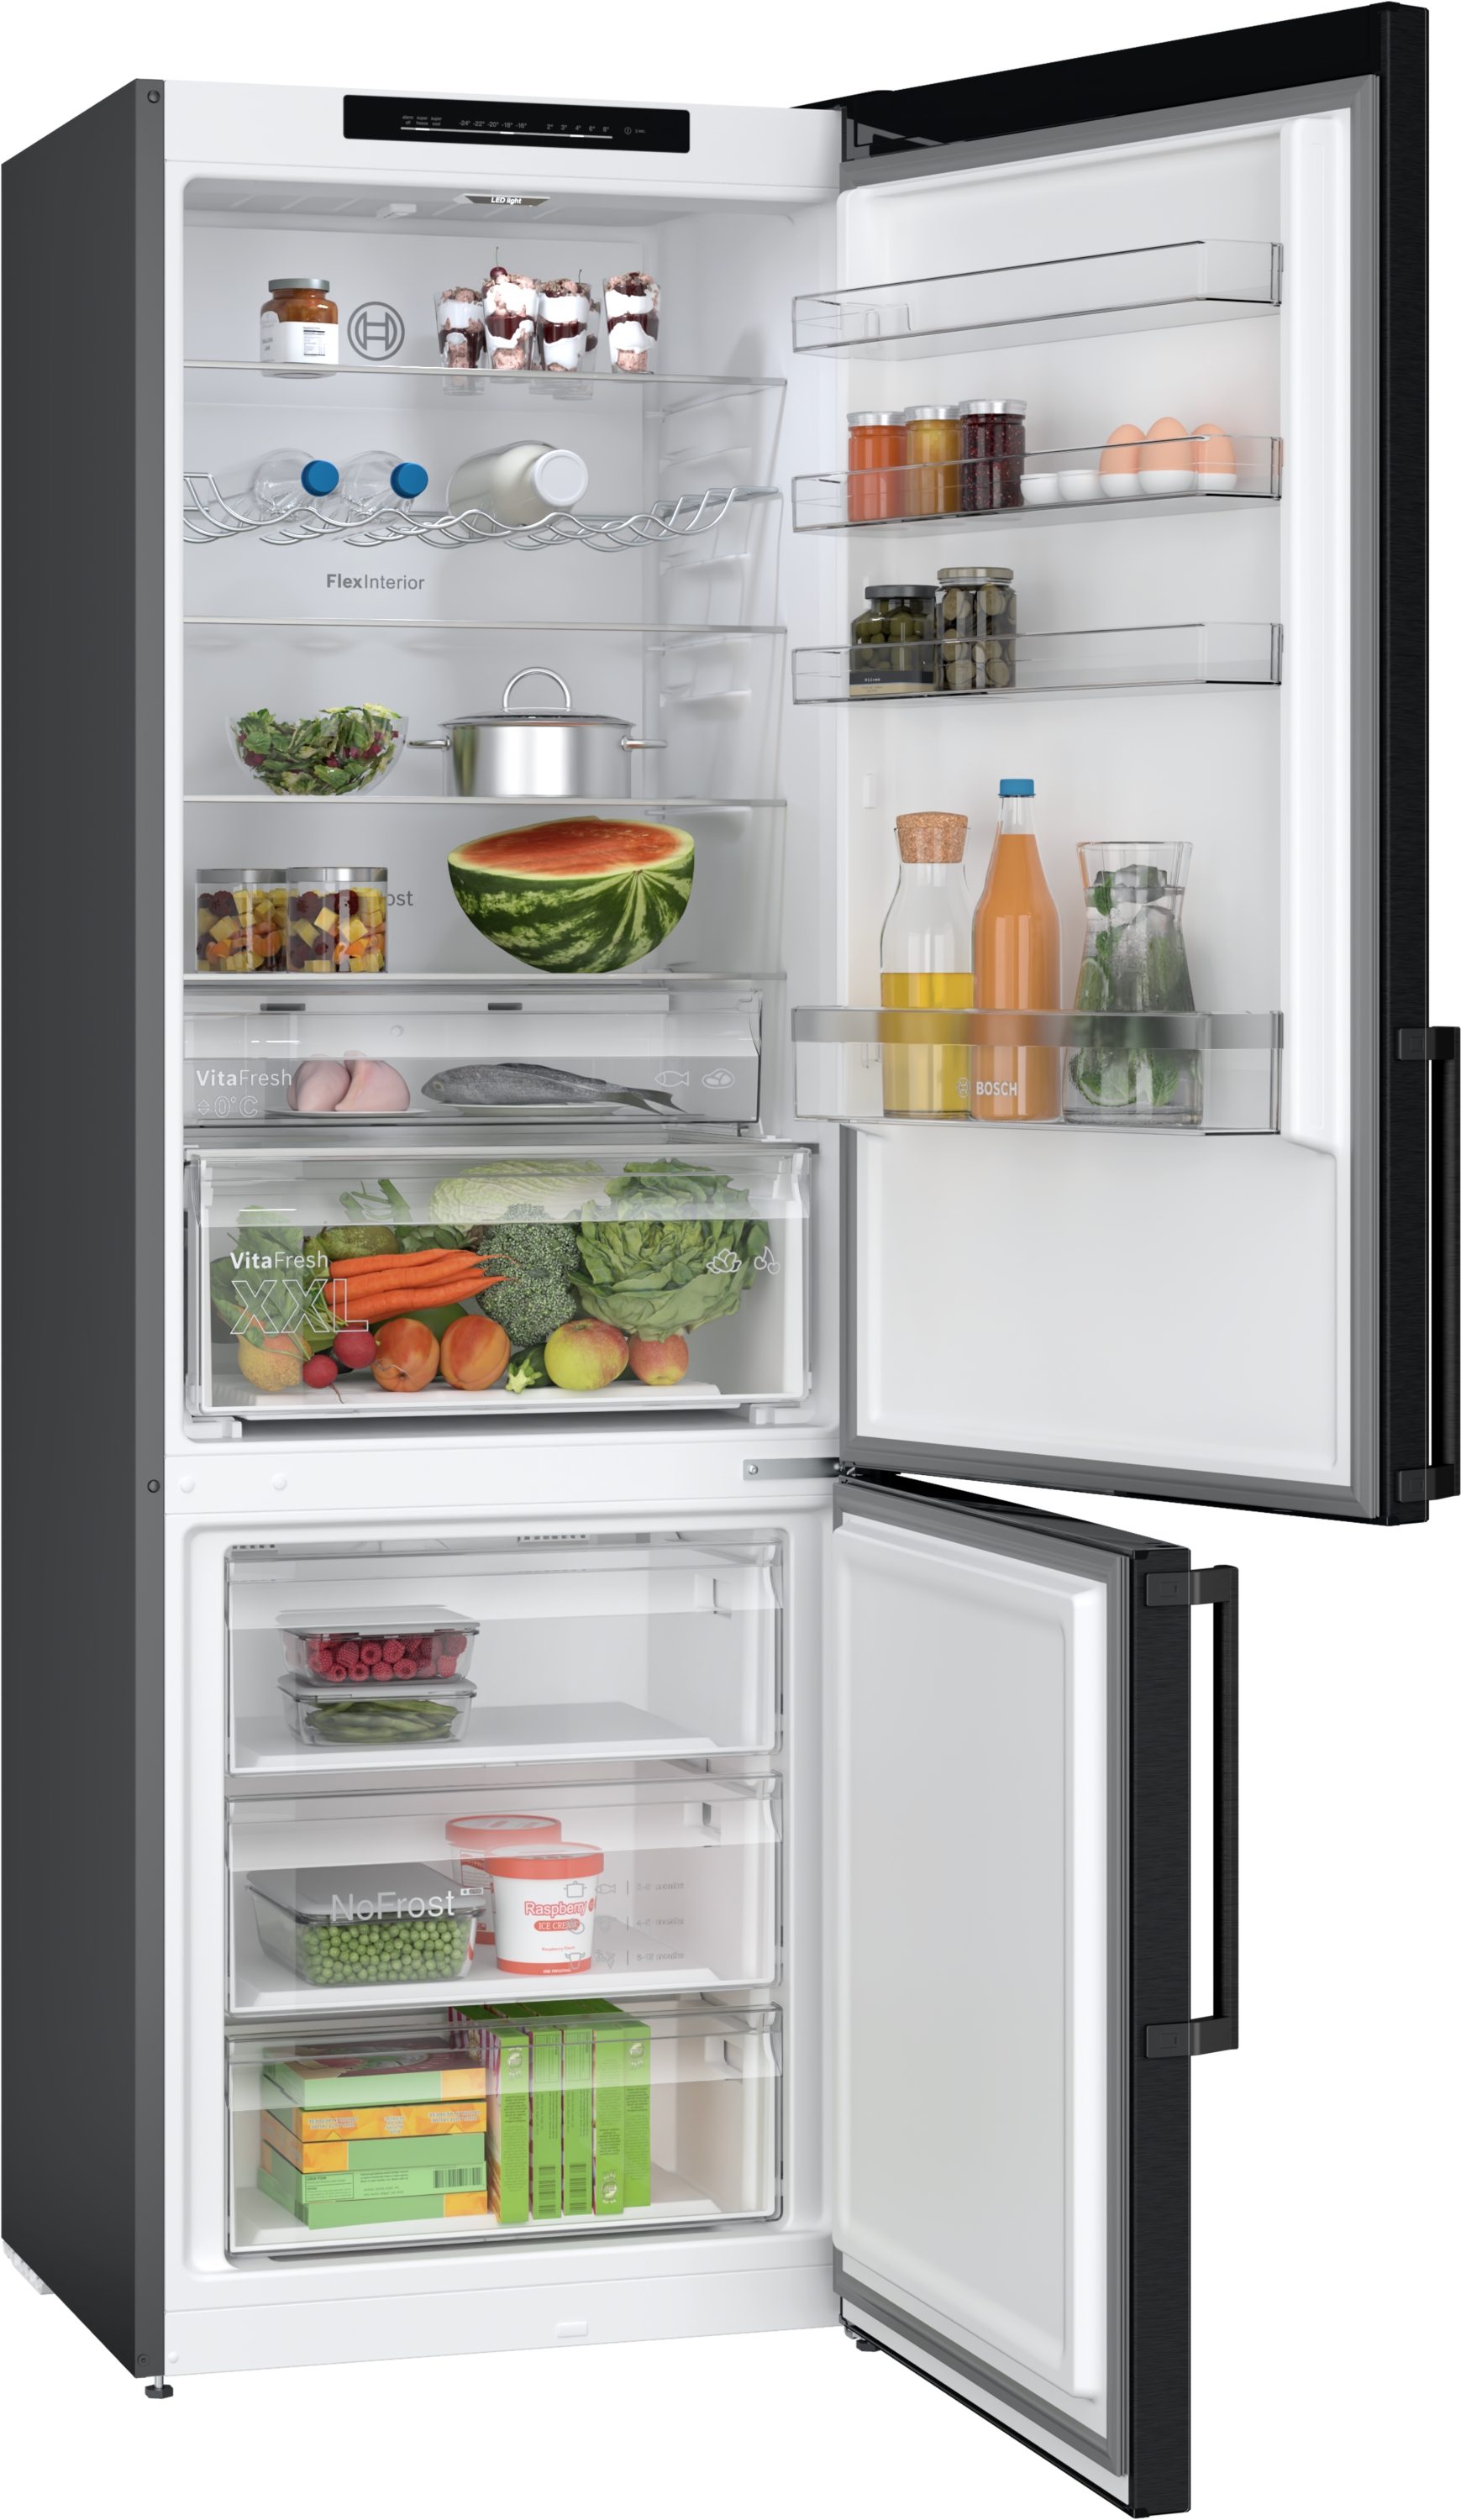 Series 4, free-standing fridge-freezer with freezer at bottom, 203 x 70 cm, Black stainless steel, KGN49VXDT